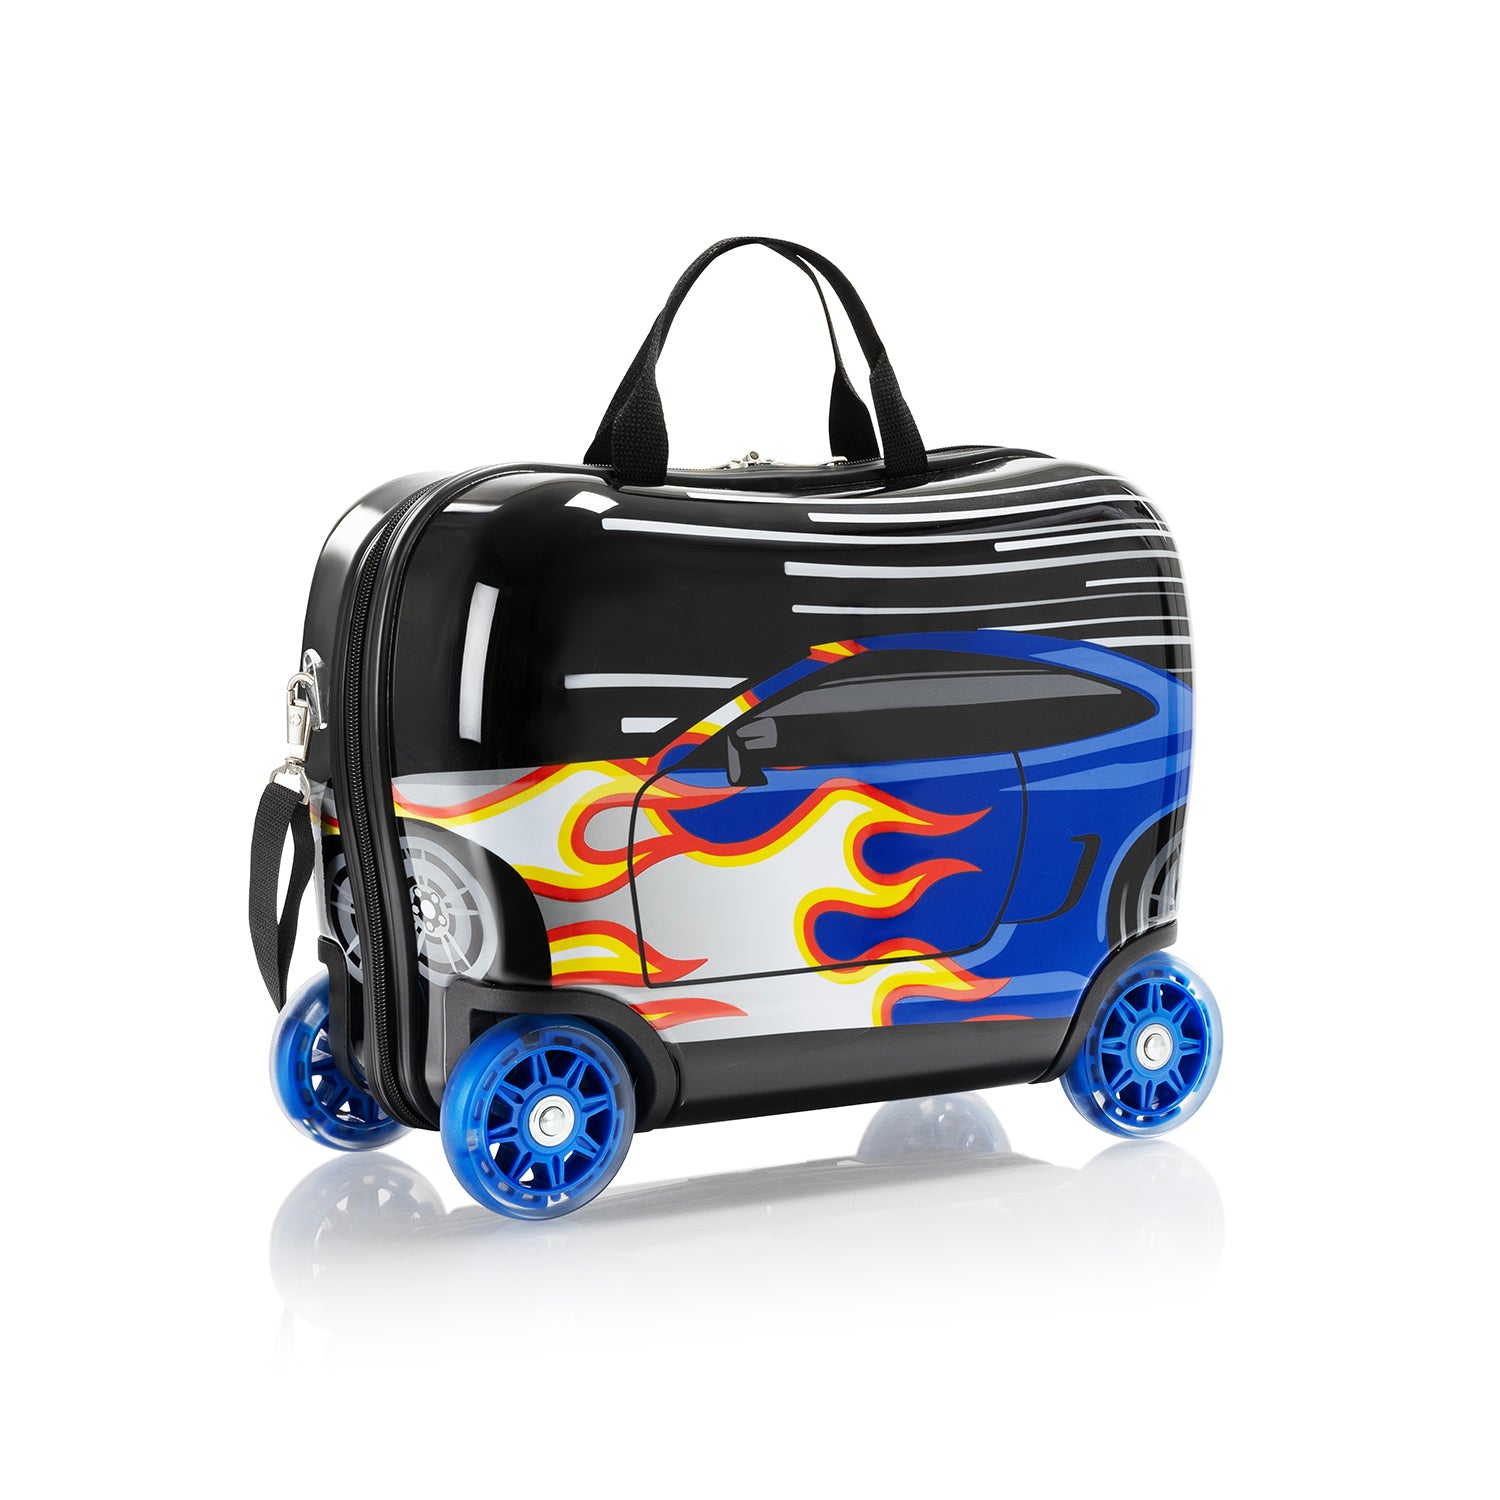 Race Car Ride-on Luggage | Light up Wheels | Kids Luggage | Kids Carry-on Luggage